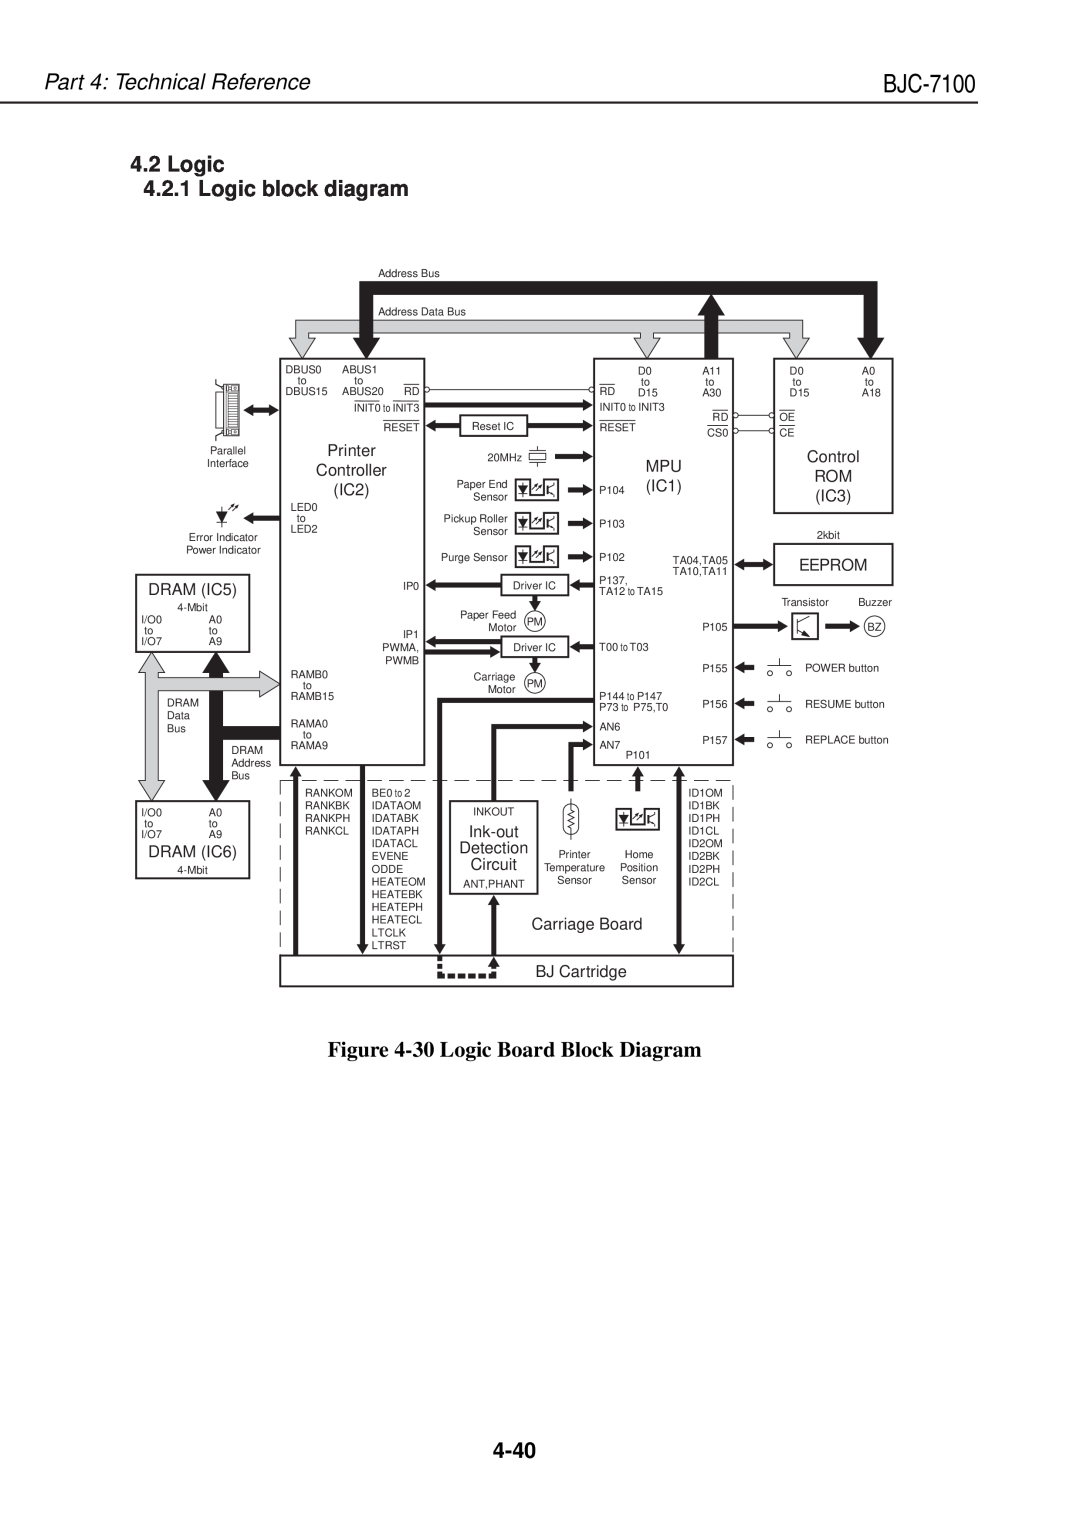 Canon QY8-1360-000 manual Logic 4.2.1 Logic block diagram, 30 Logic Board Block Diagram, 4-40, Part 4 Technical Reference 